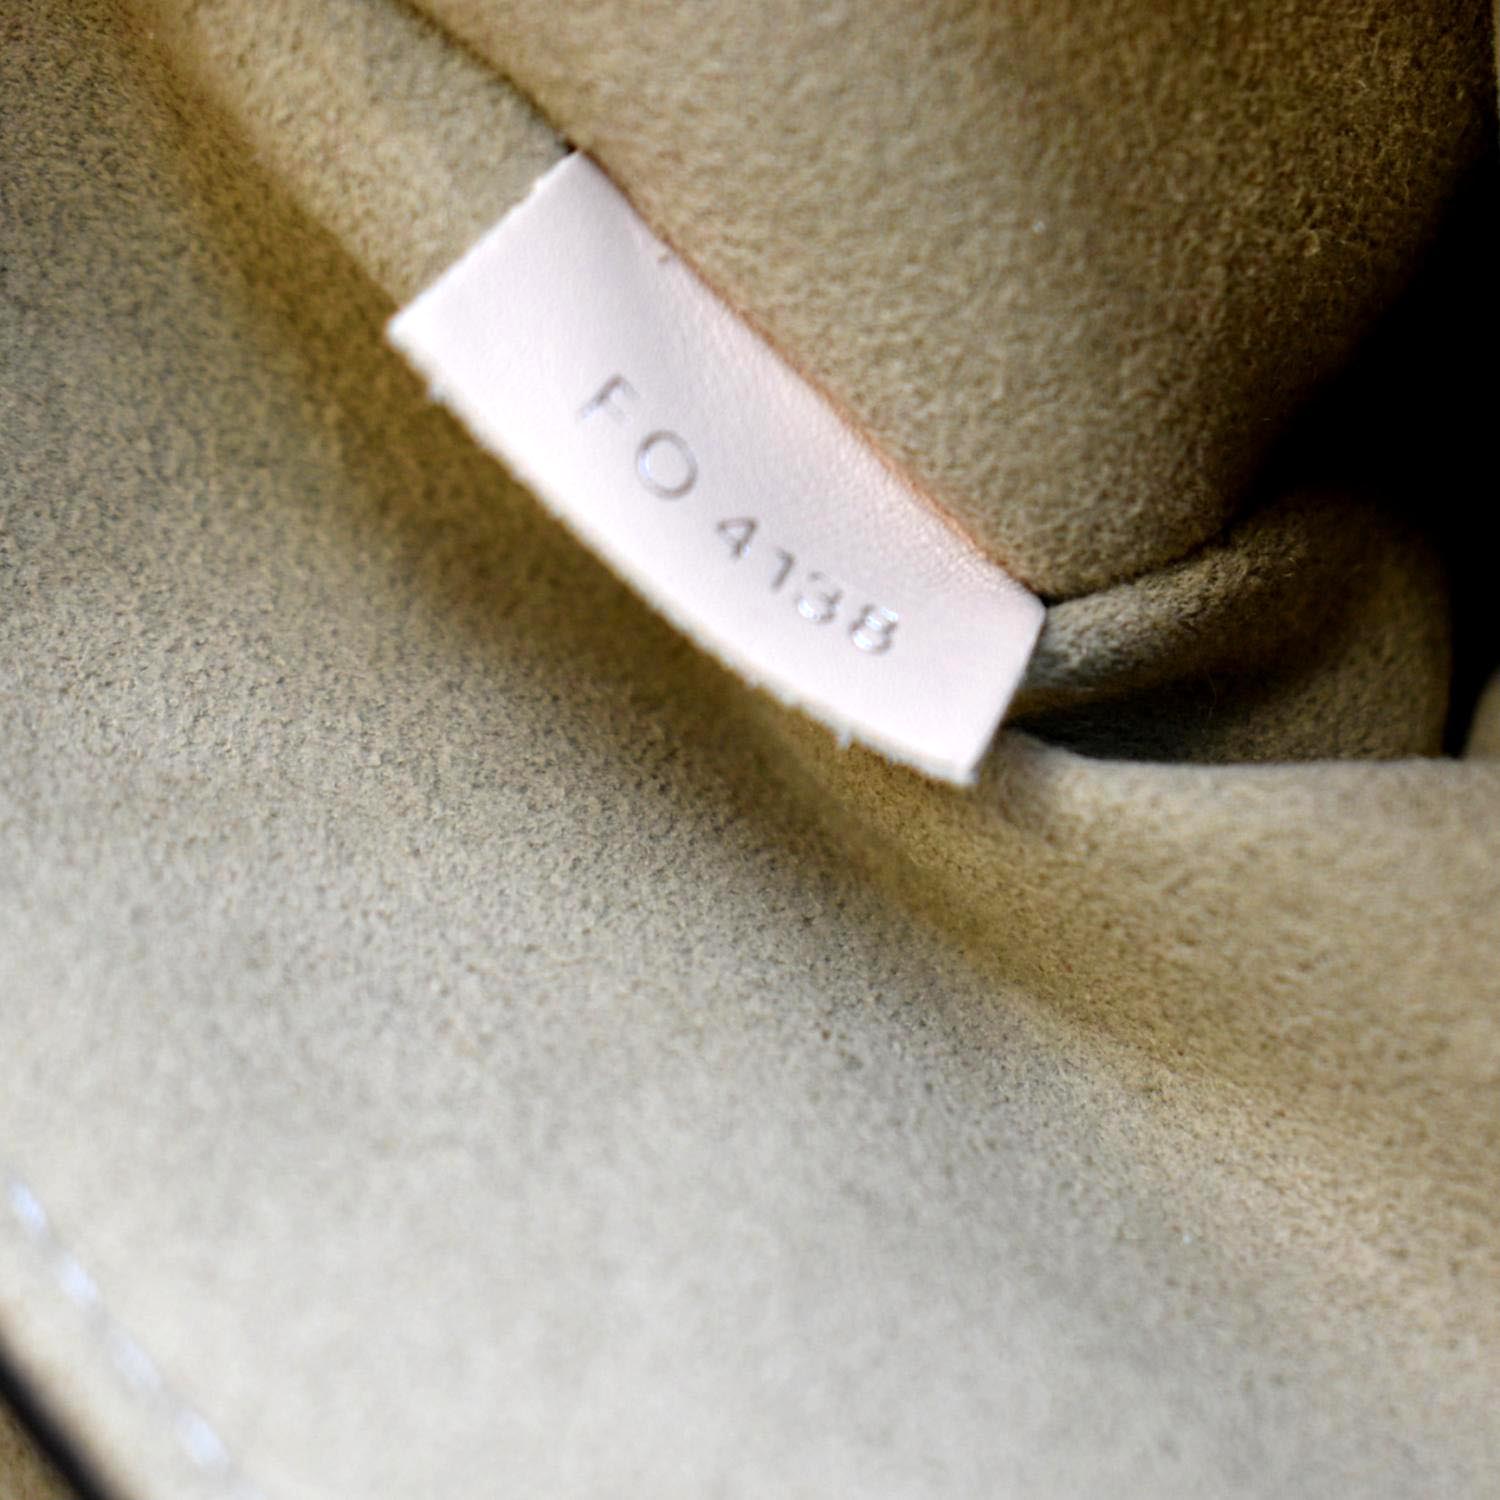 Louis Vuitton Very Calfskin Leather Shoulder Bag